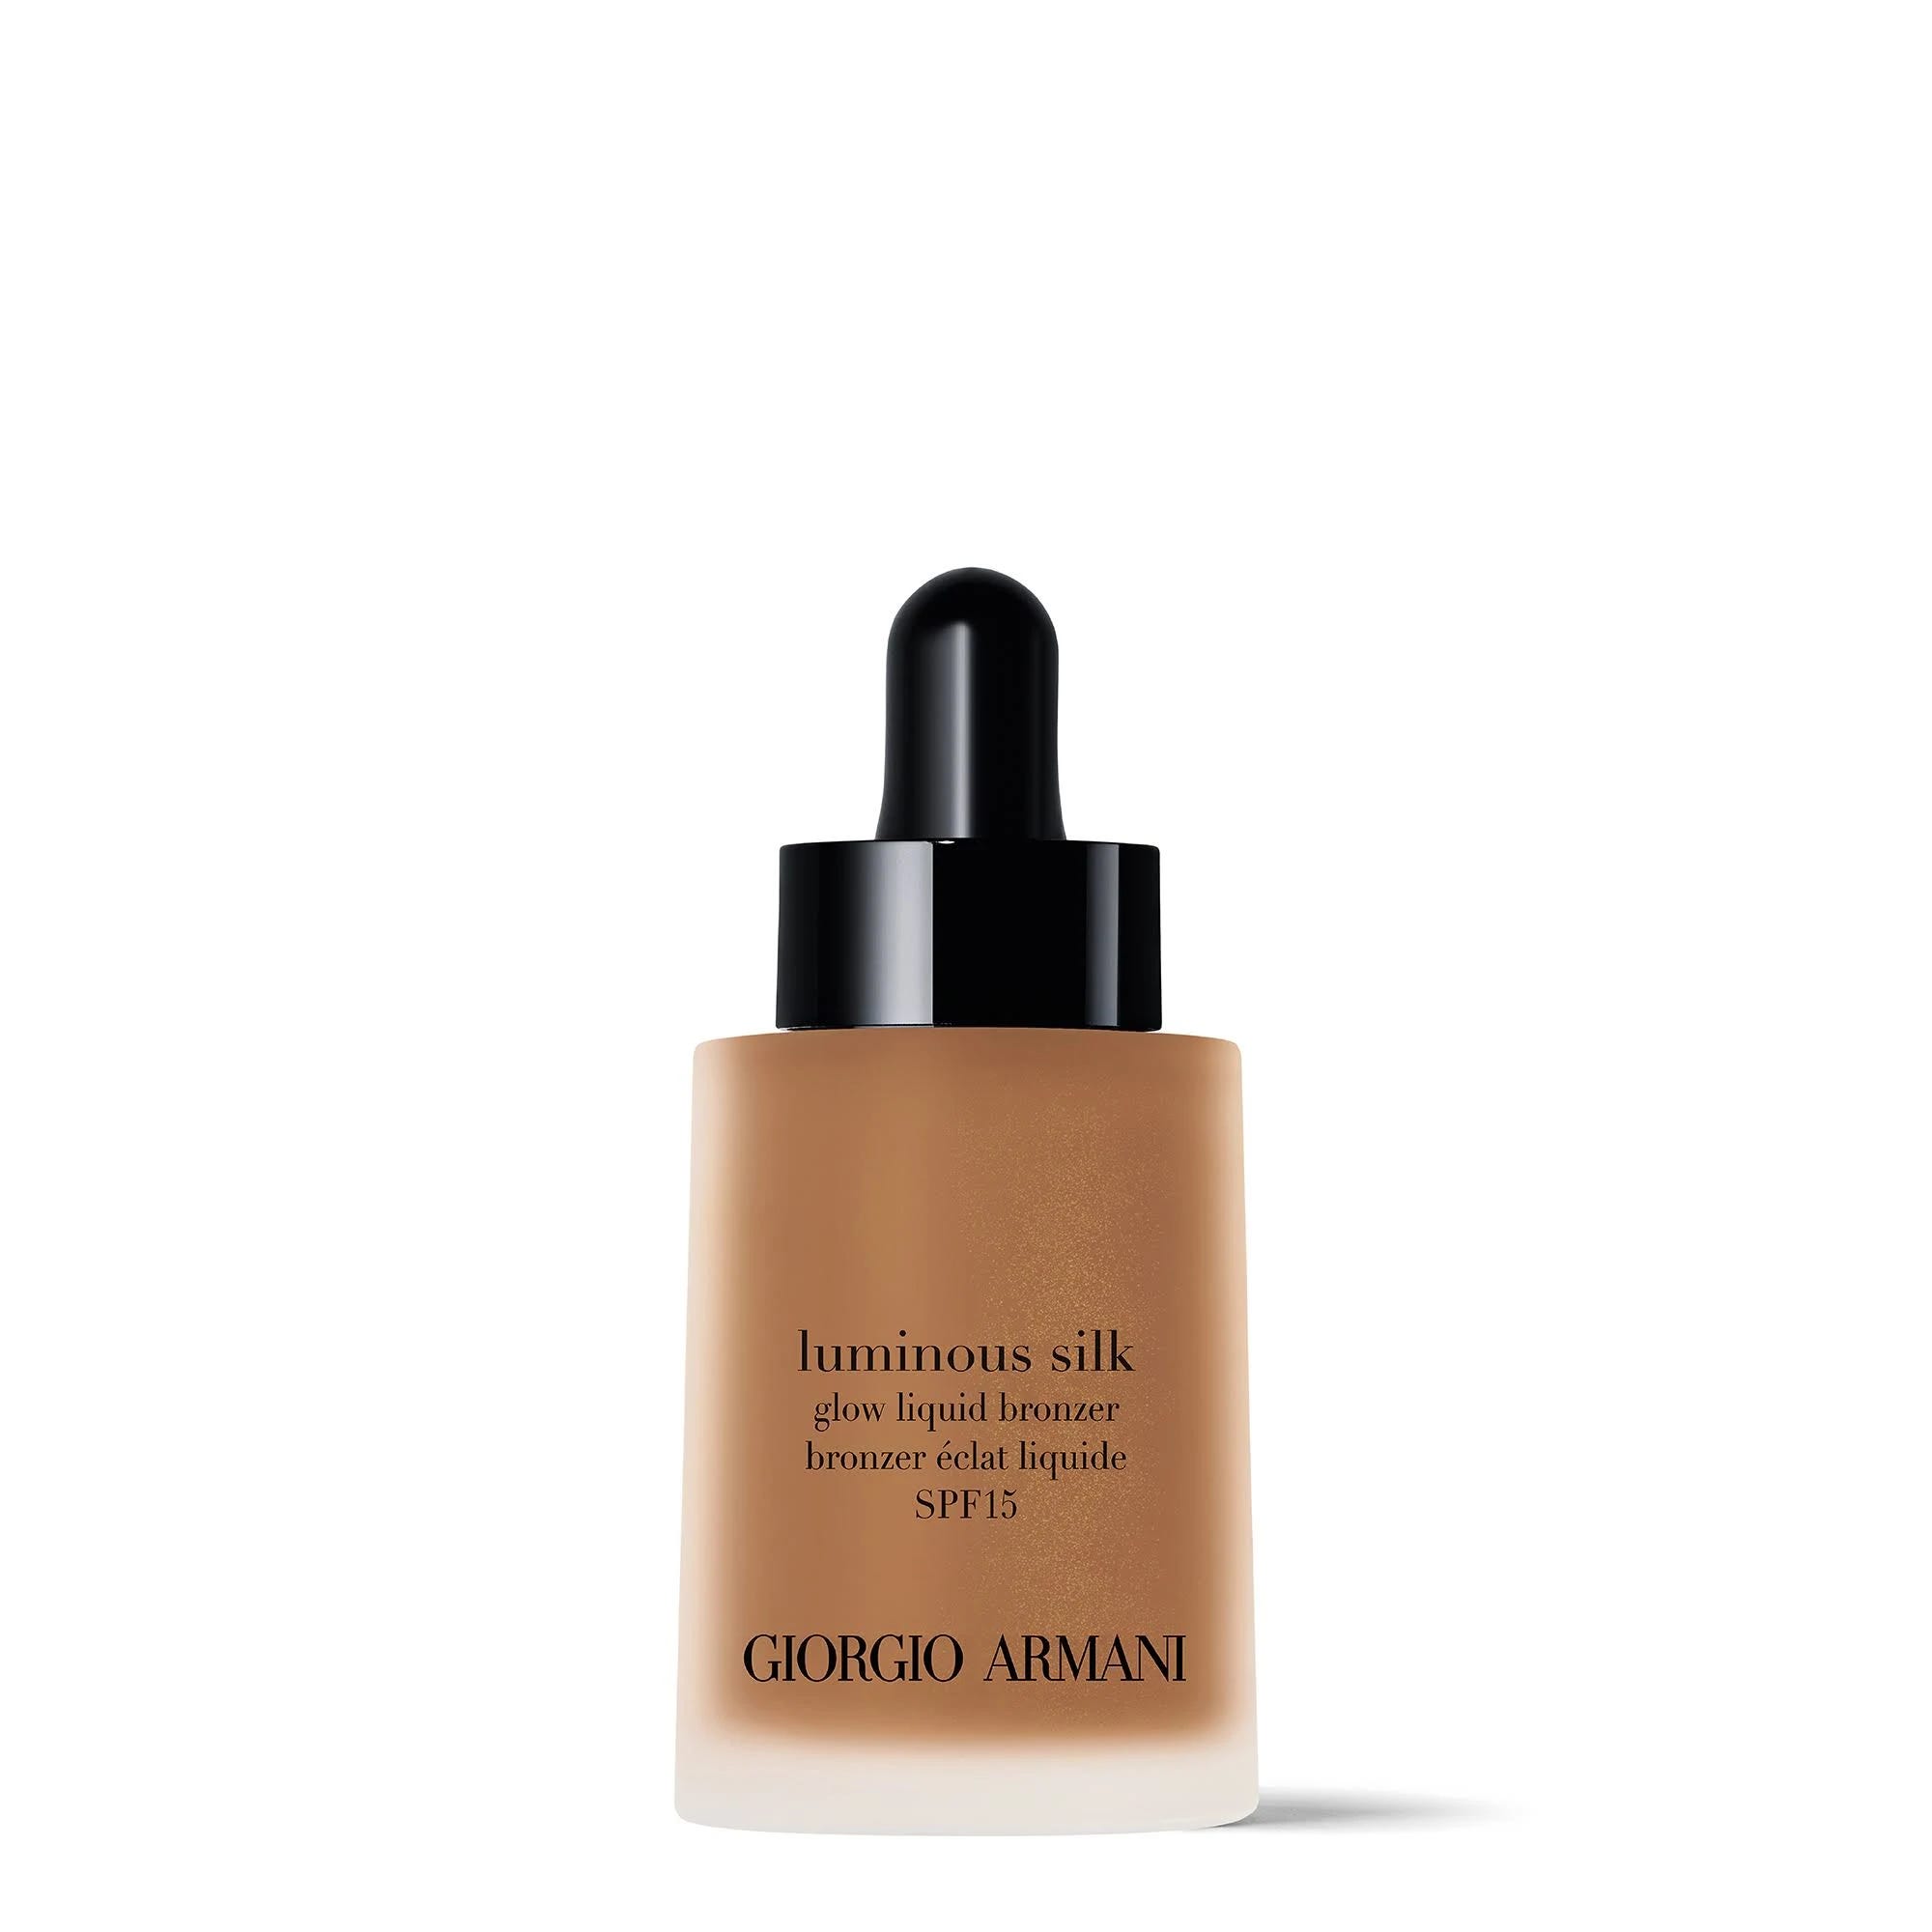 Armani Beauty Luminous Silk Glow Liquid Bronzer Drops - Medium to Tan | Image